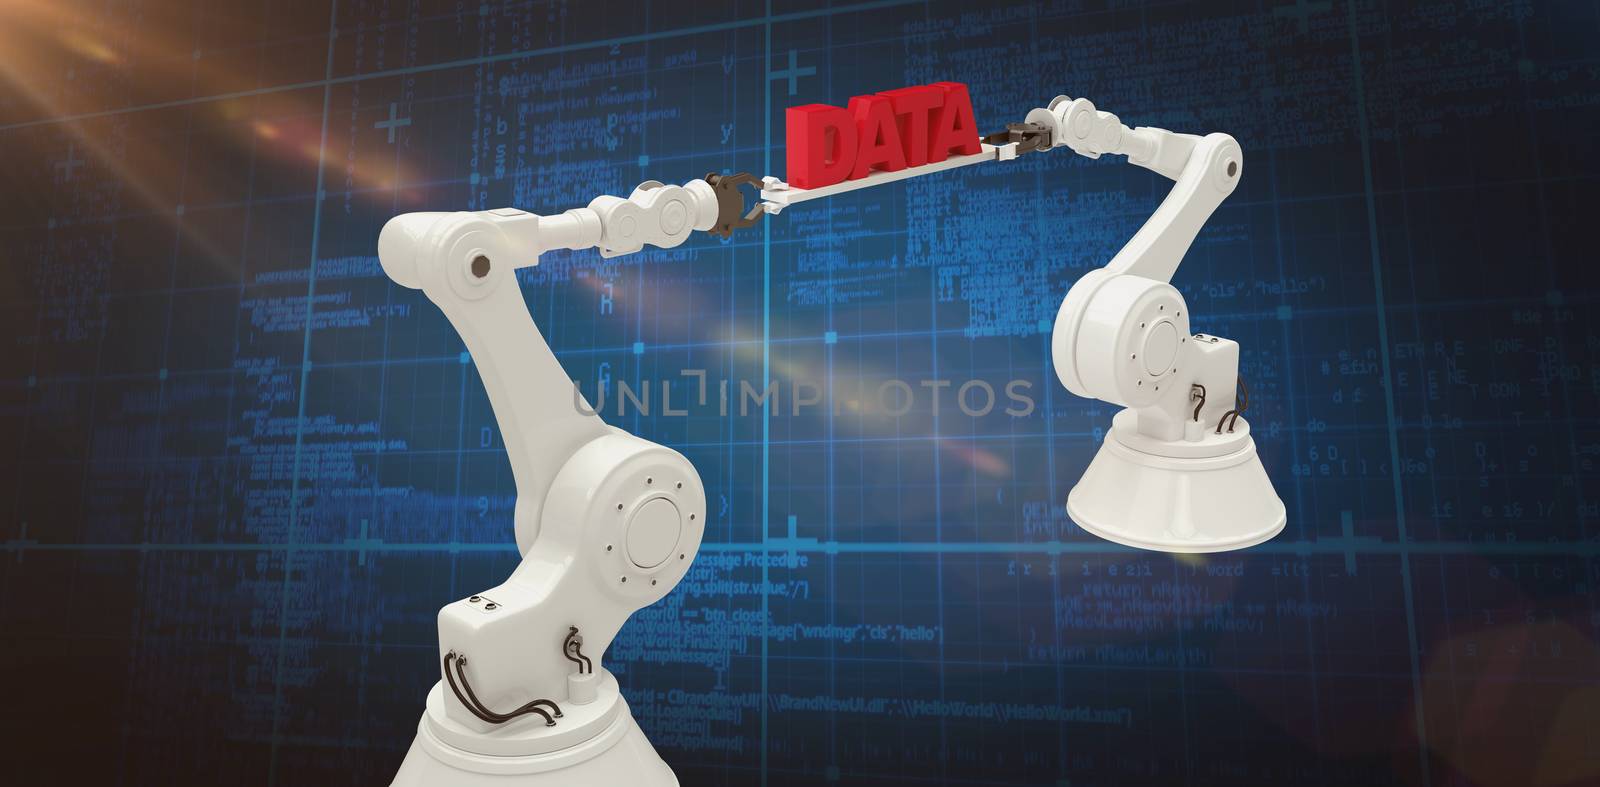 White robotic hands holding red data message against white background against blue background with vignette